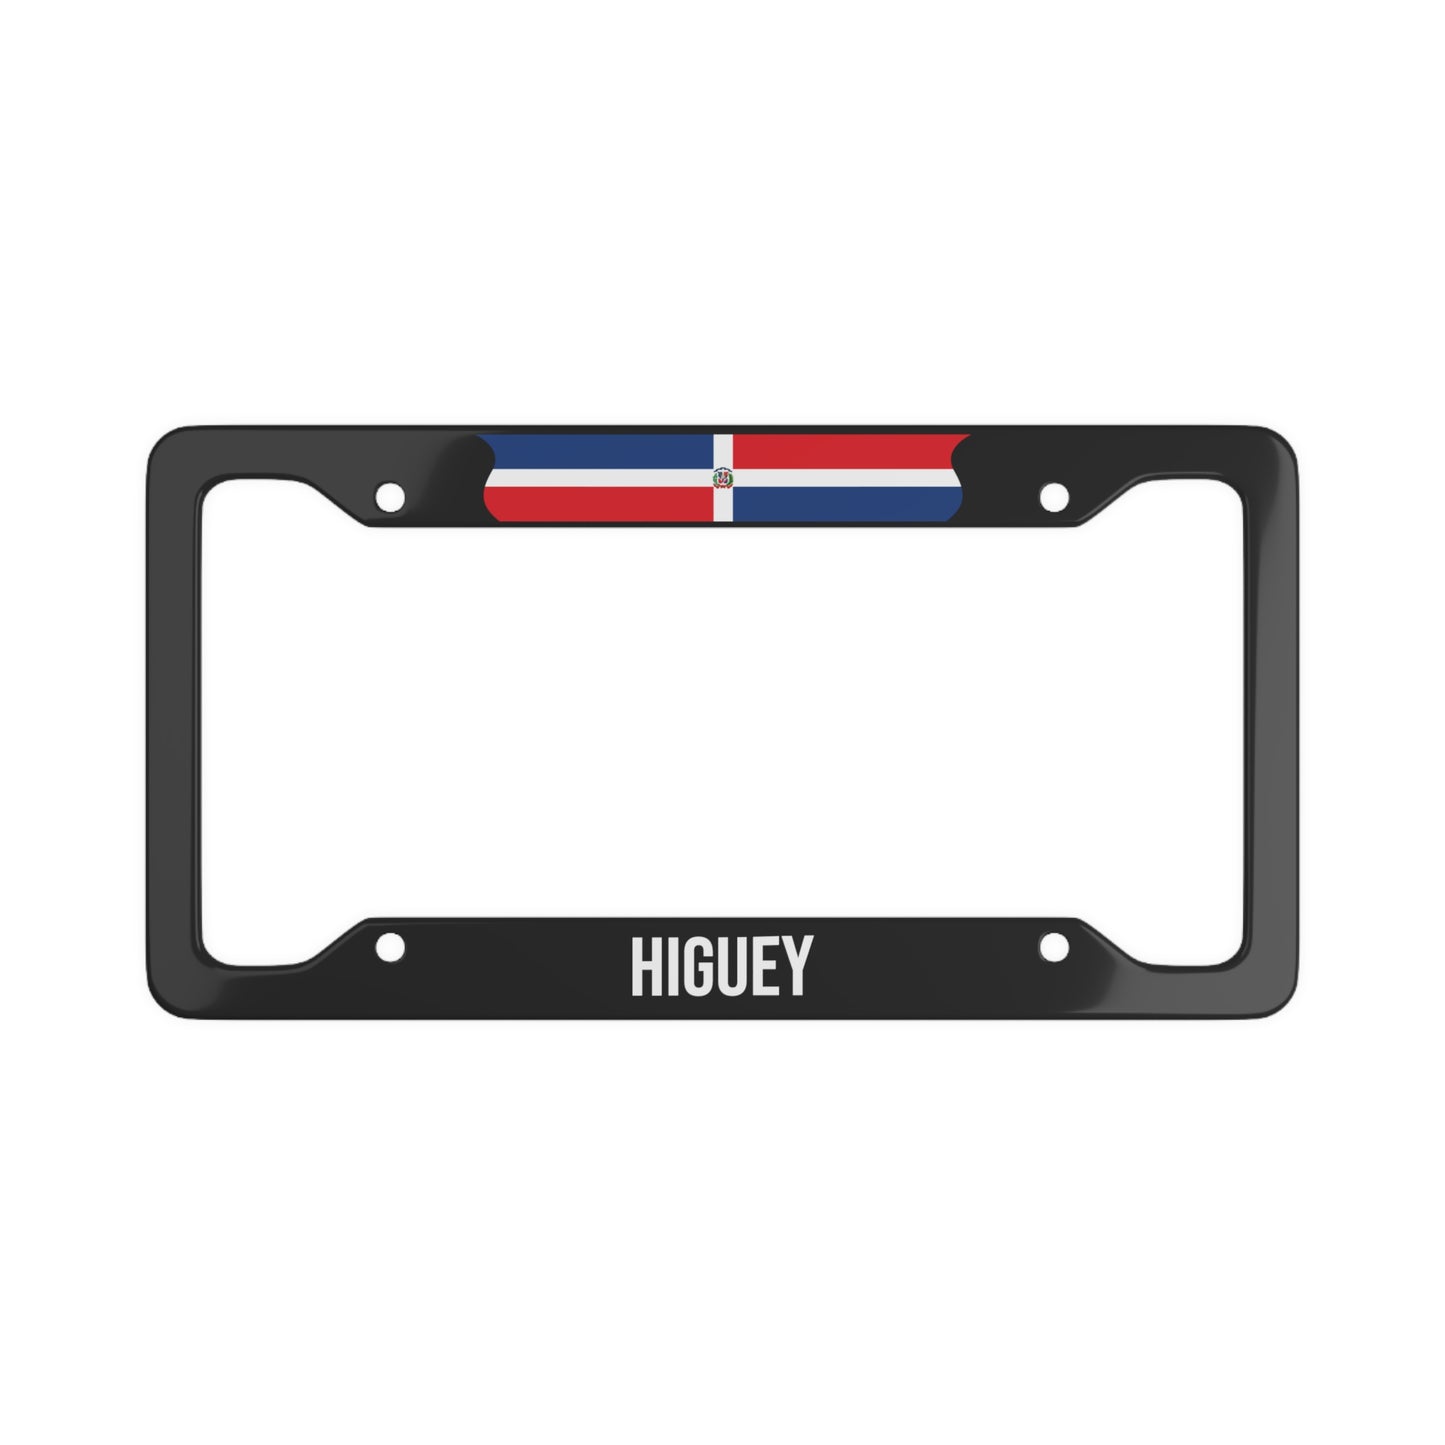 Higuey, Dominicana Car Plate Frame